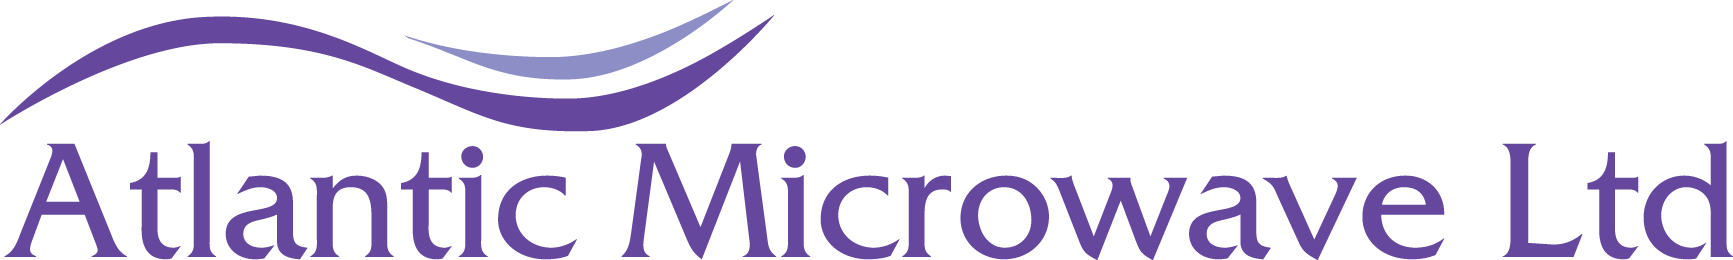 Atlantic Microwave Ltd Logo